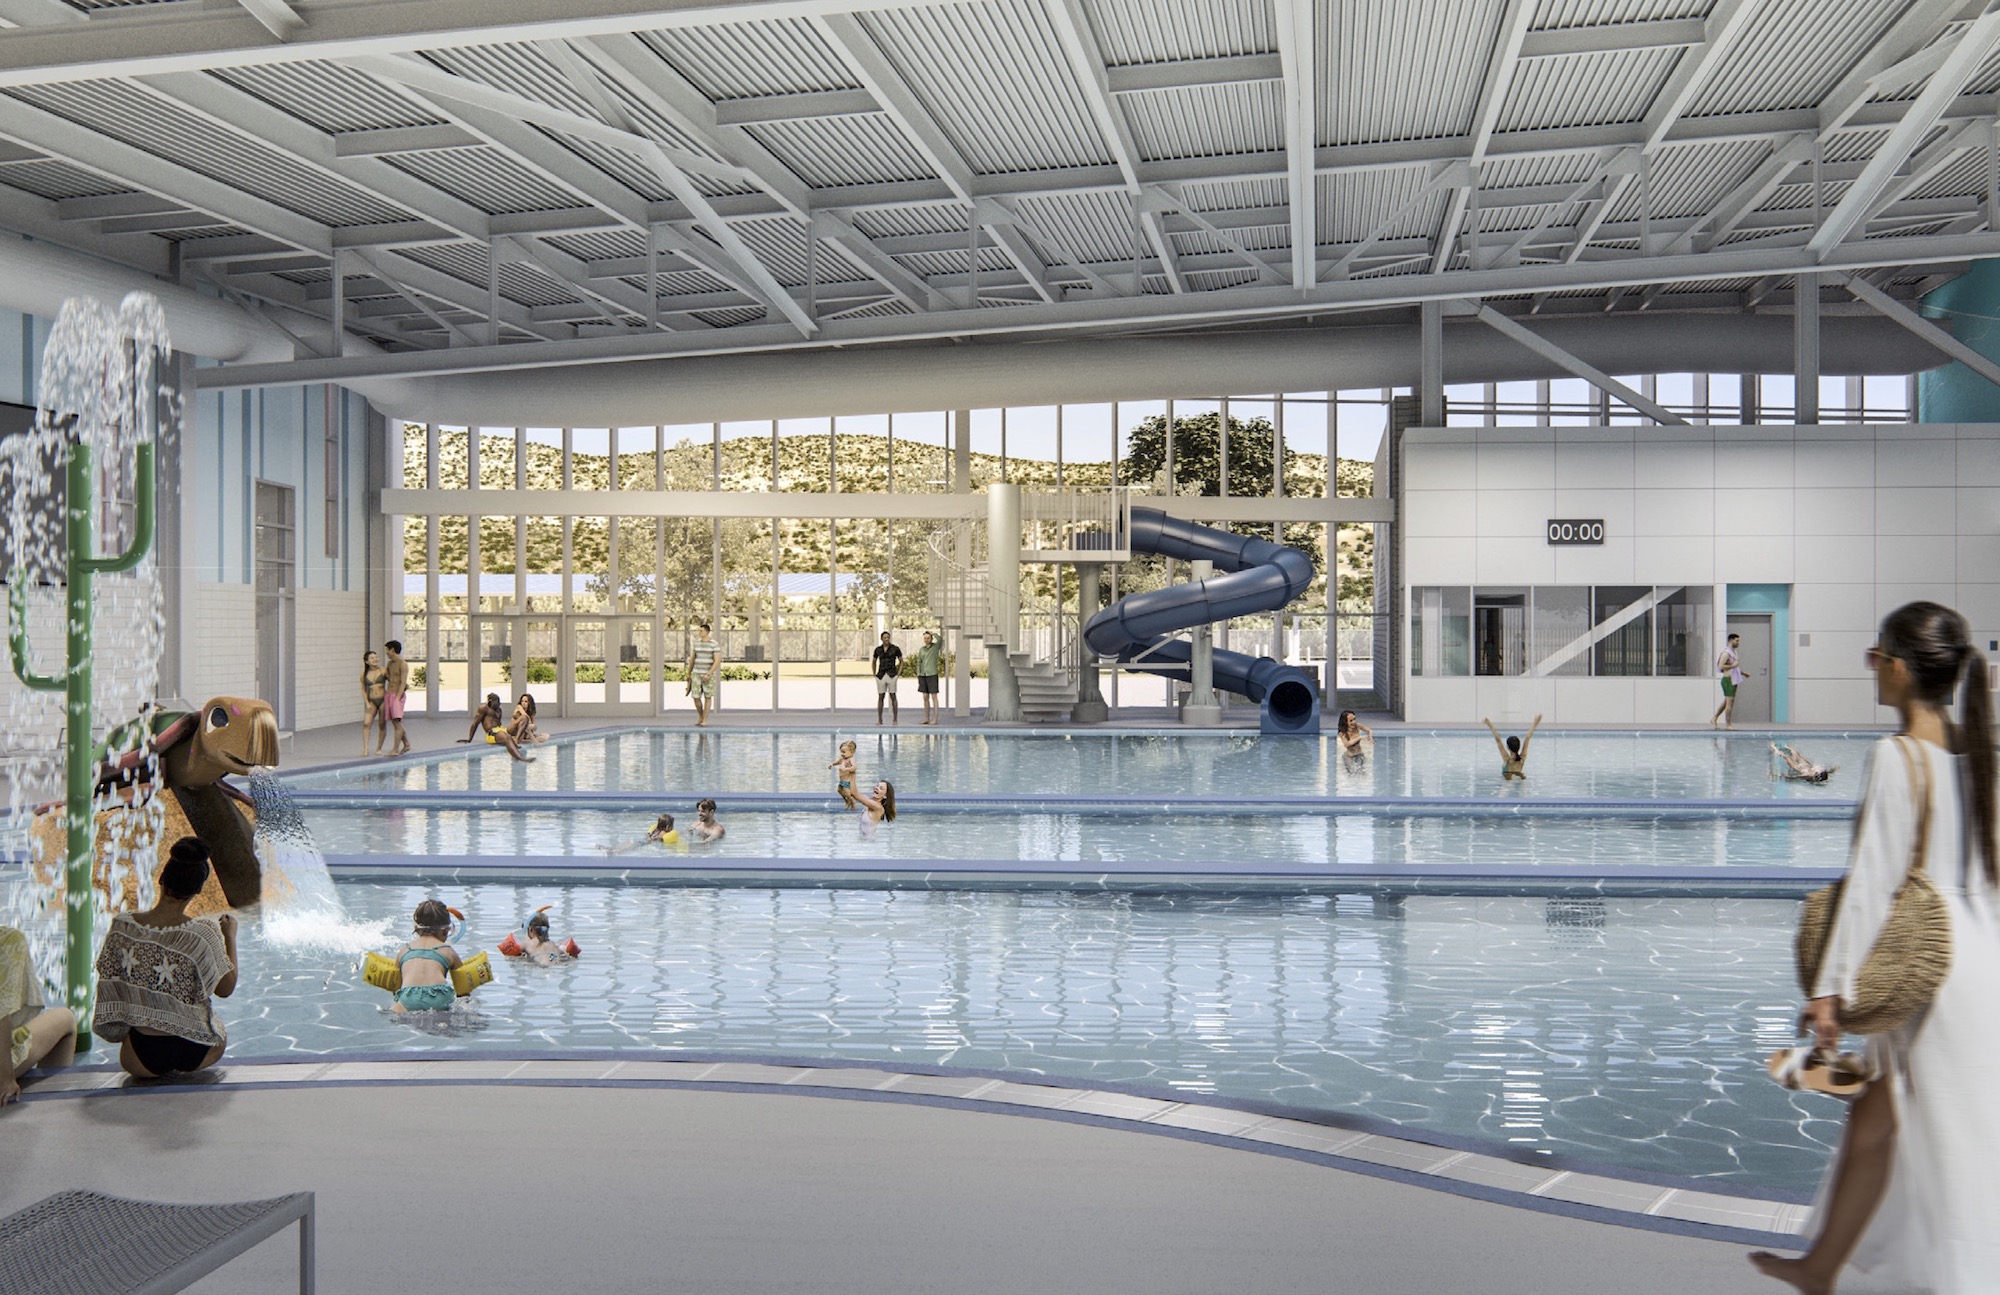 10 ways public aquatic centers and recreation centers benefit community health